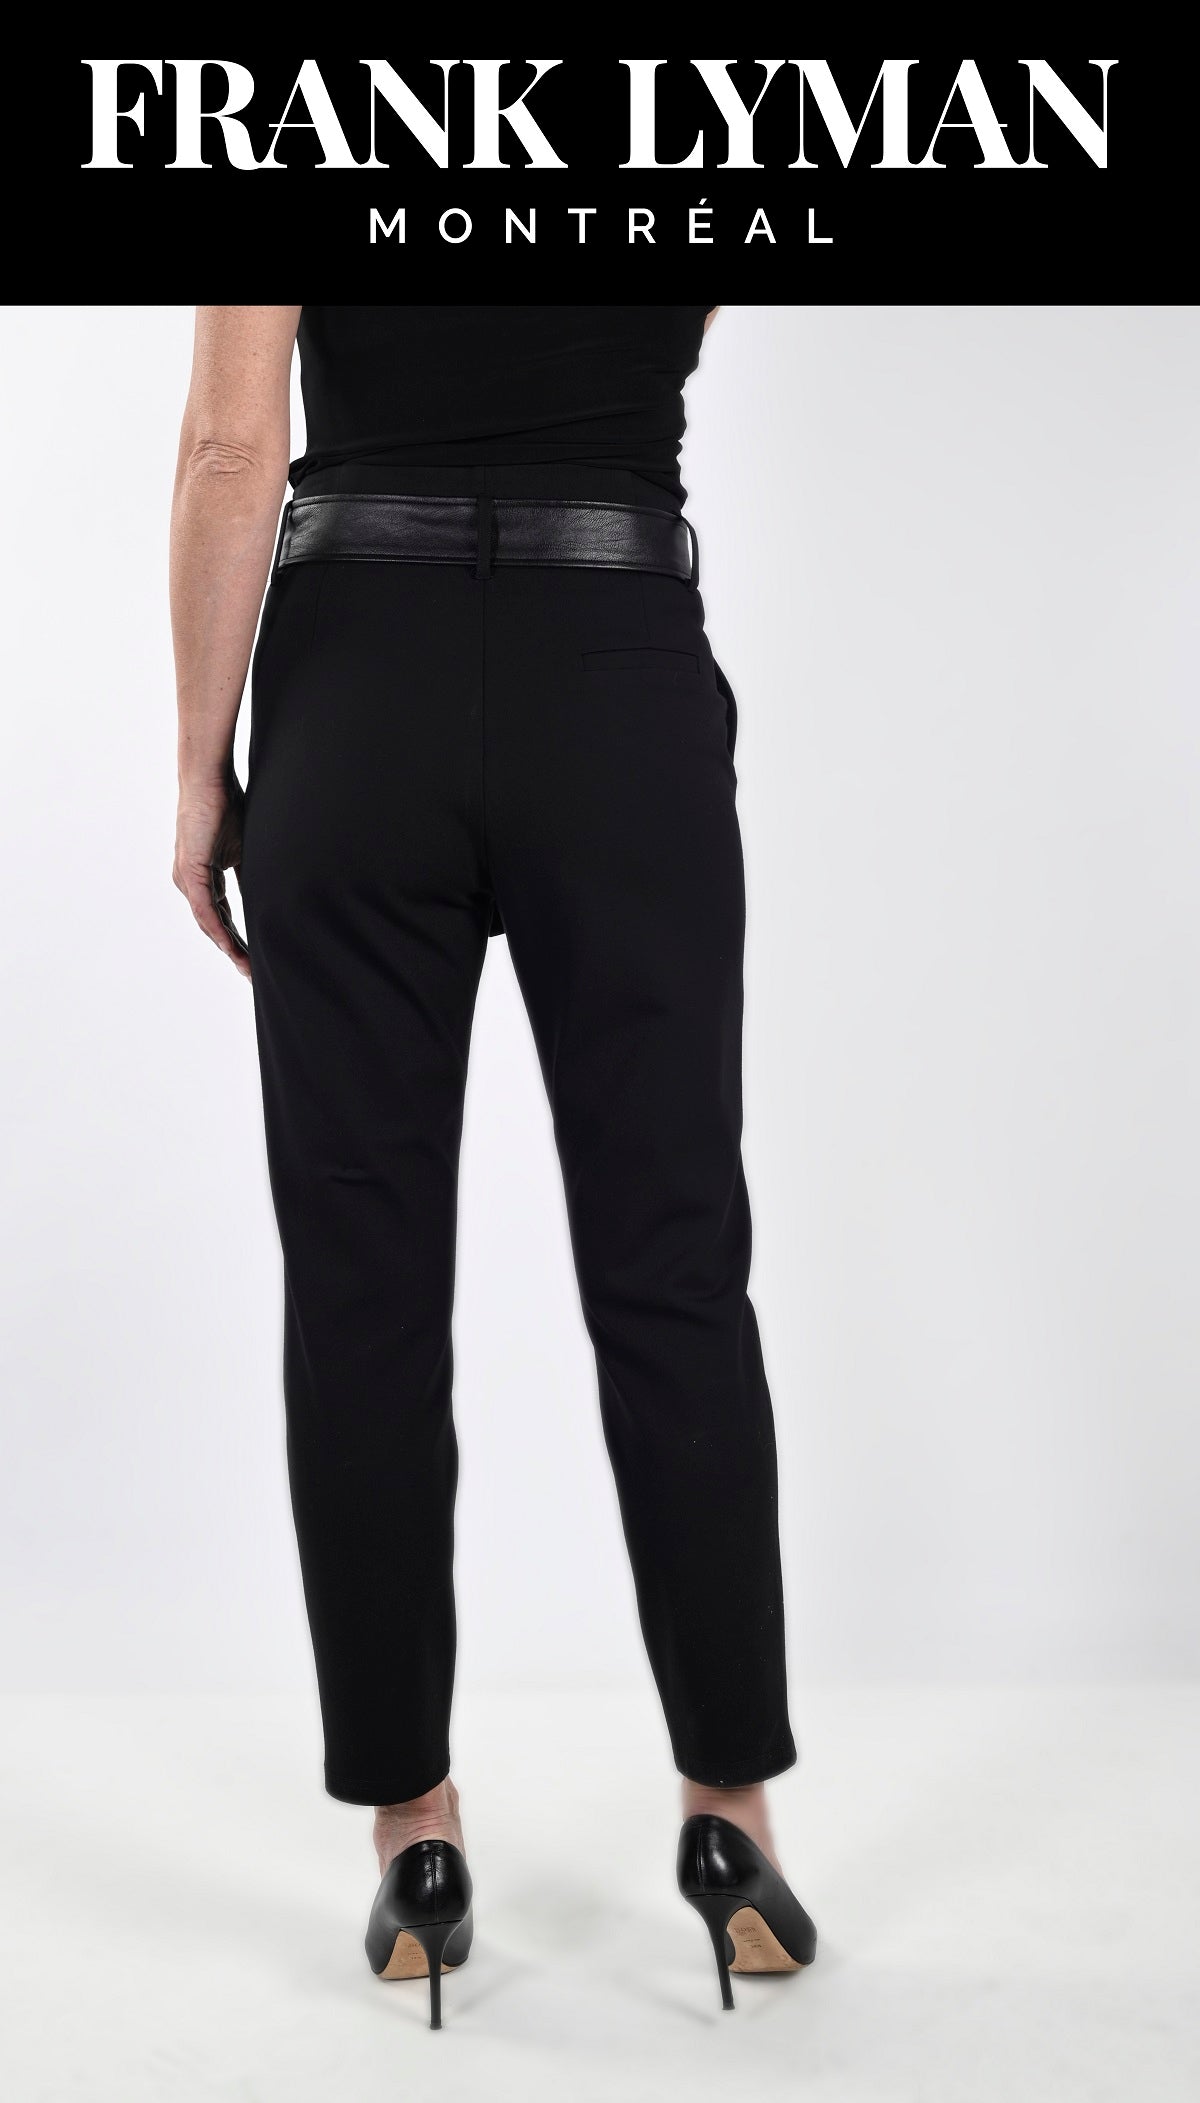 Frank Lyman Montreal Pants-Buy Frank Lyman Montreal Pants Online-Black Pant